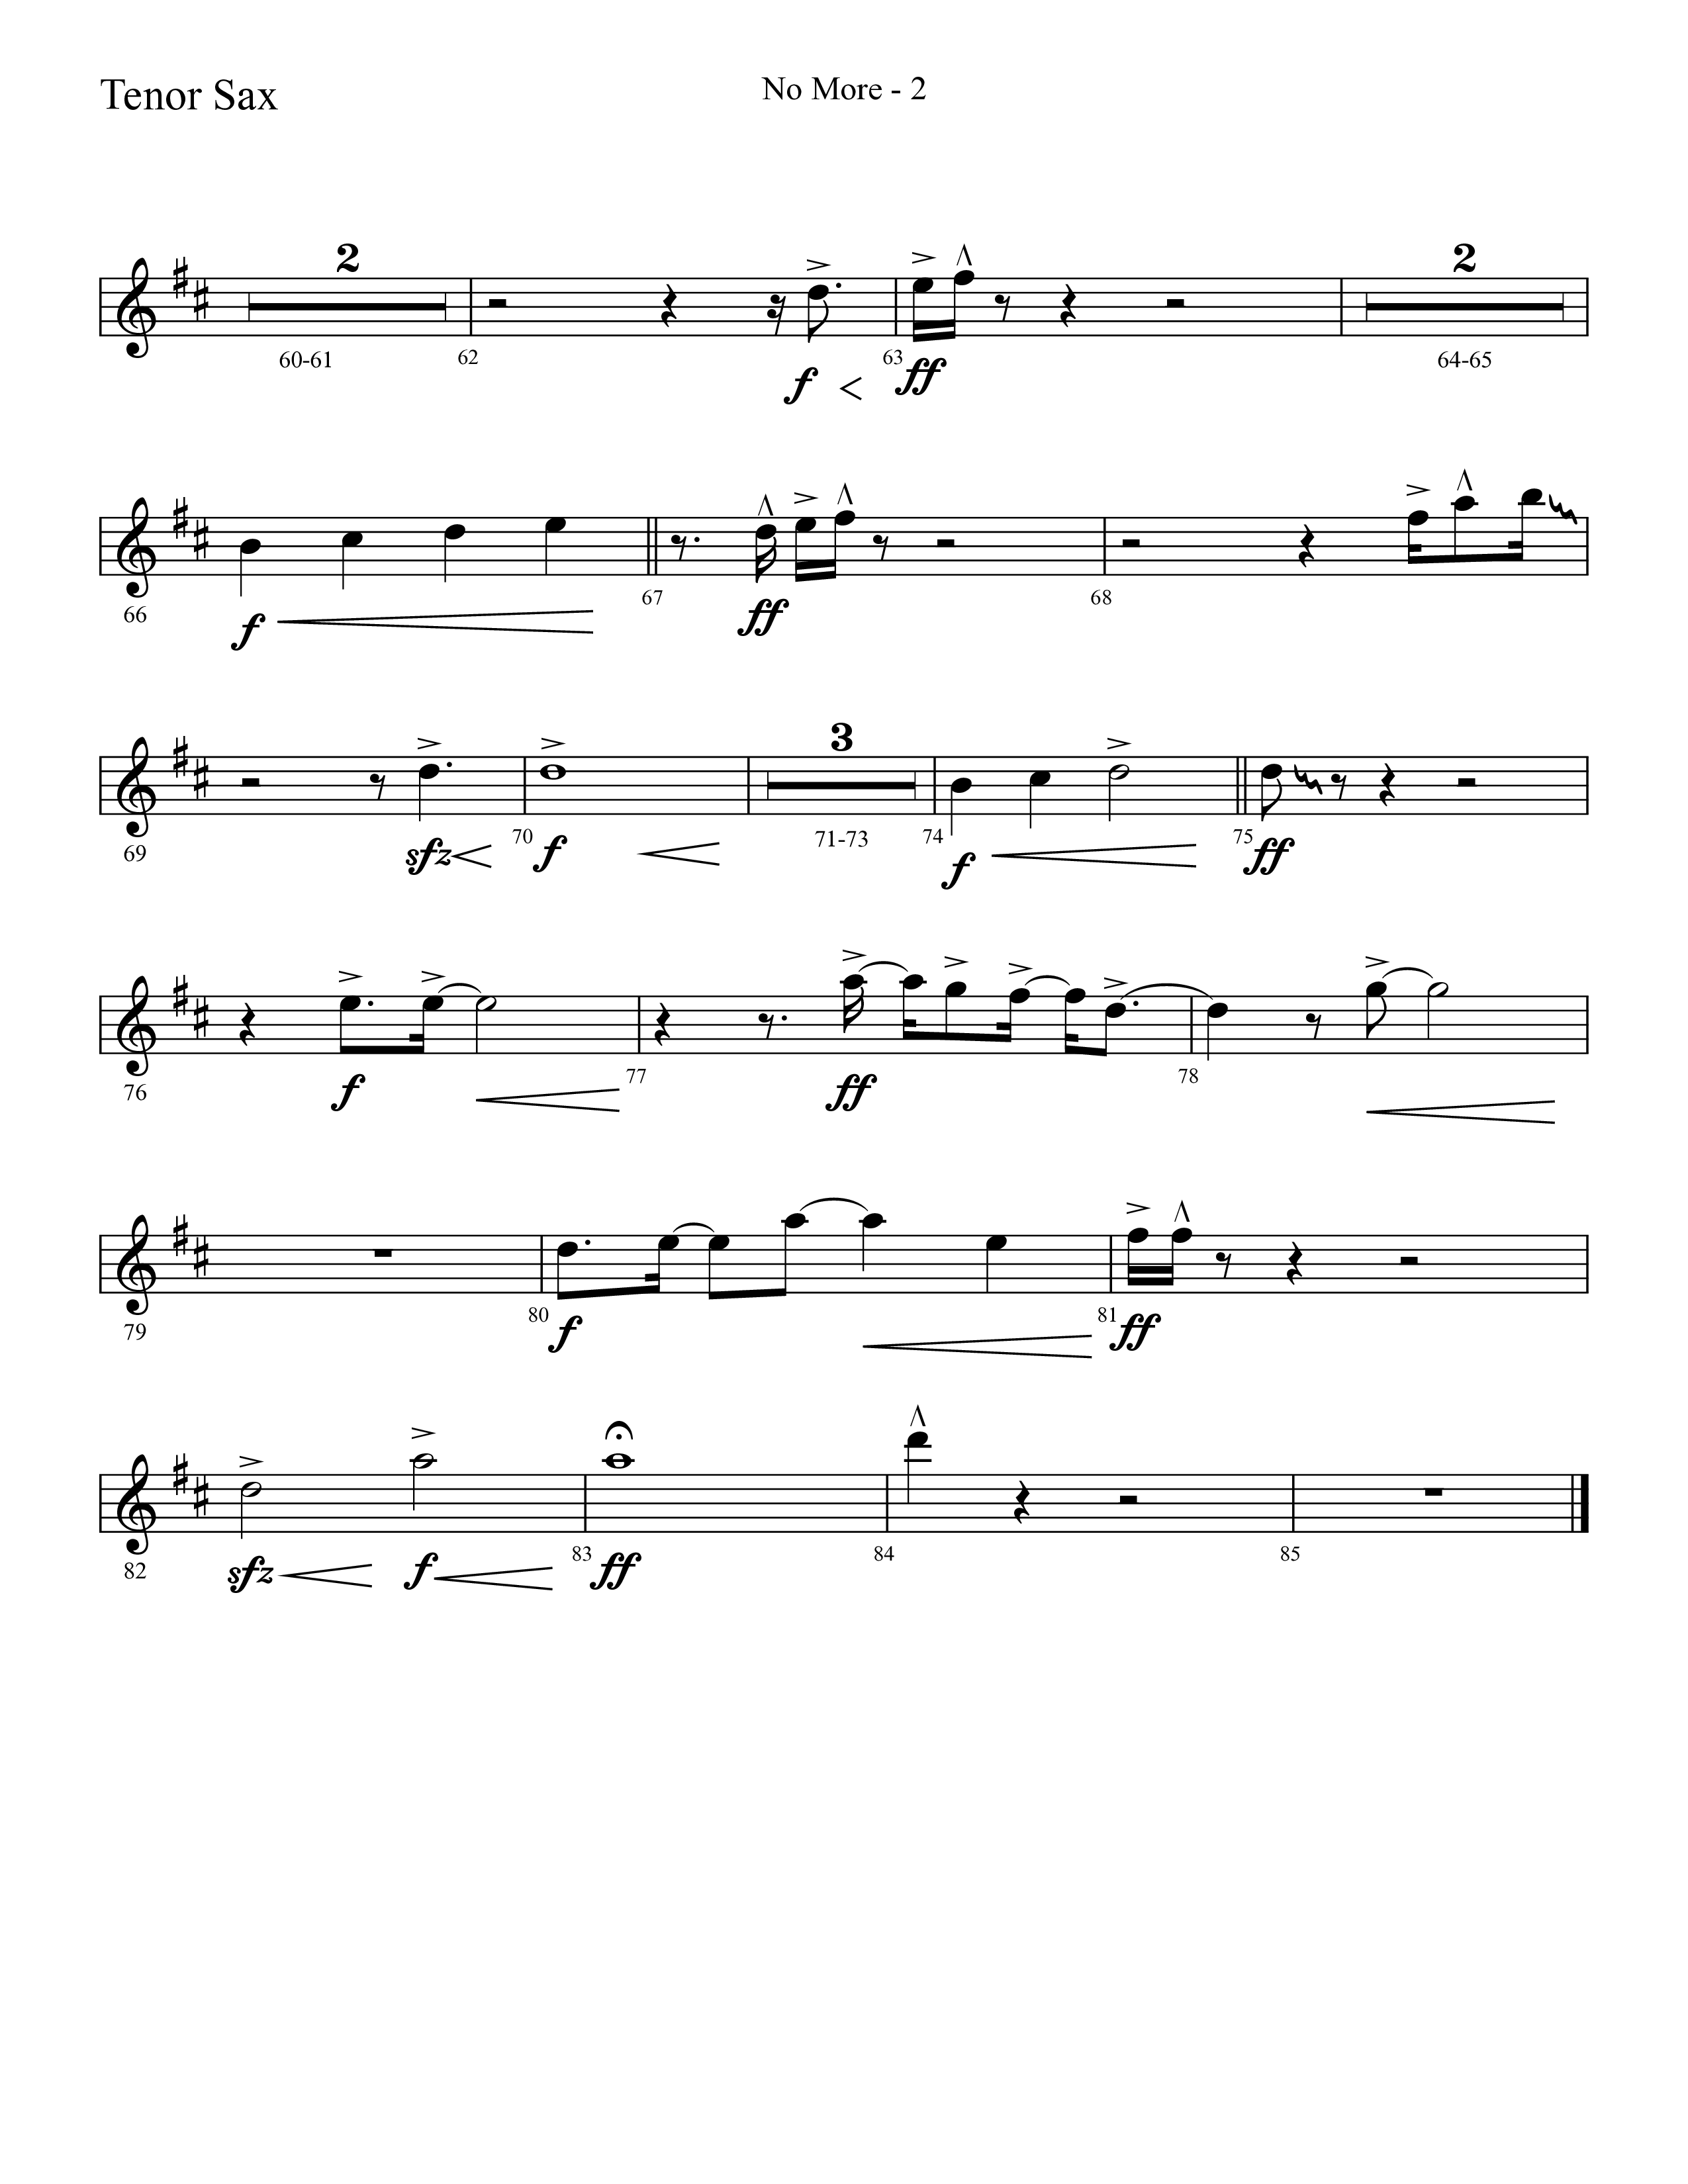 No More (Choral Anthem SATB) Tenor Sax 1 (Lifeway Choral / Arr. Cliff Duren)